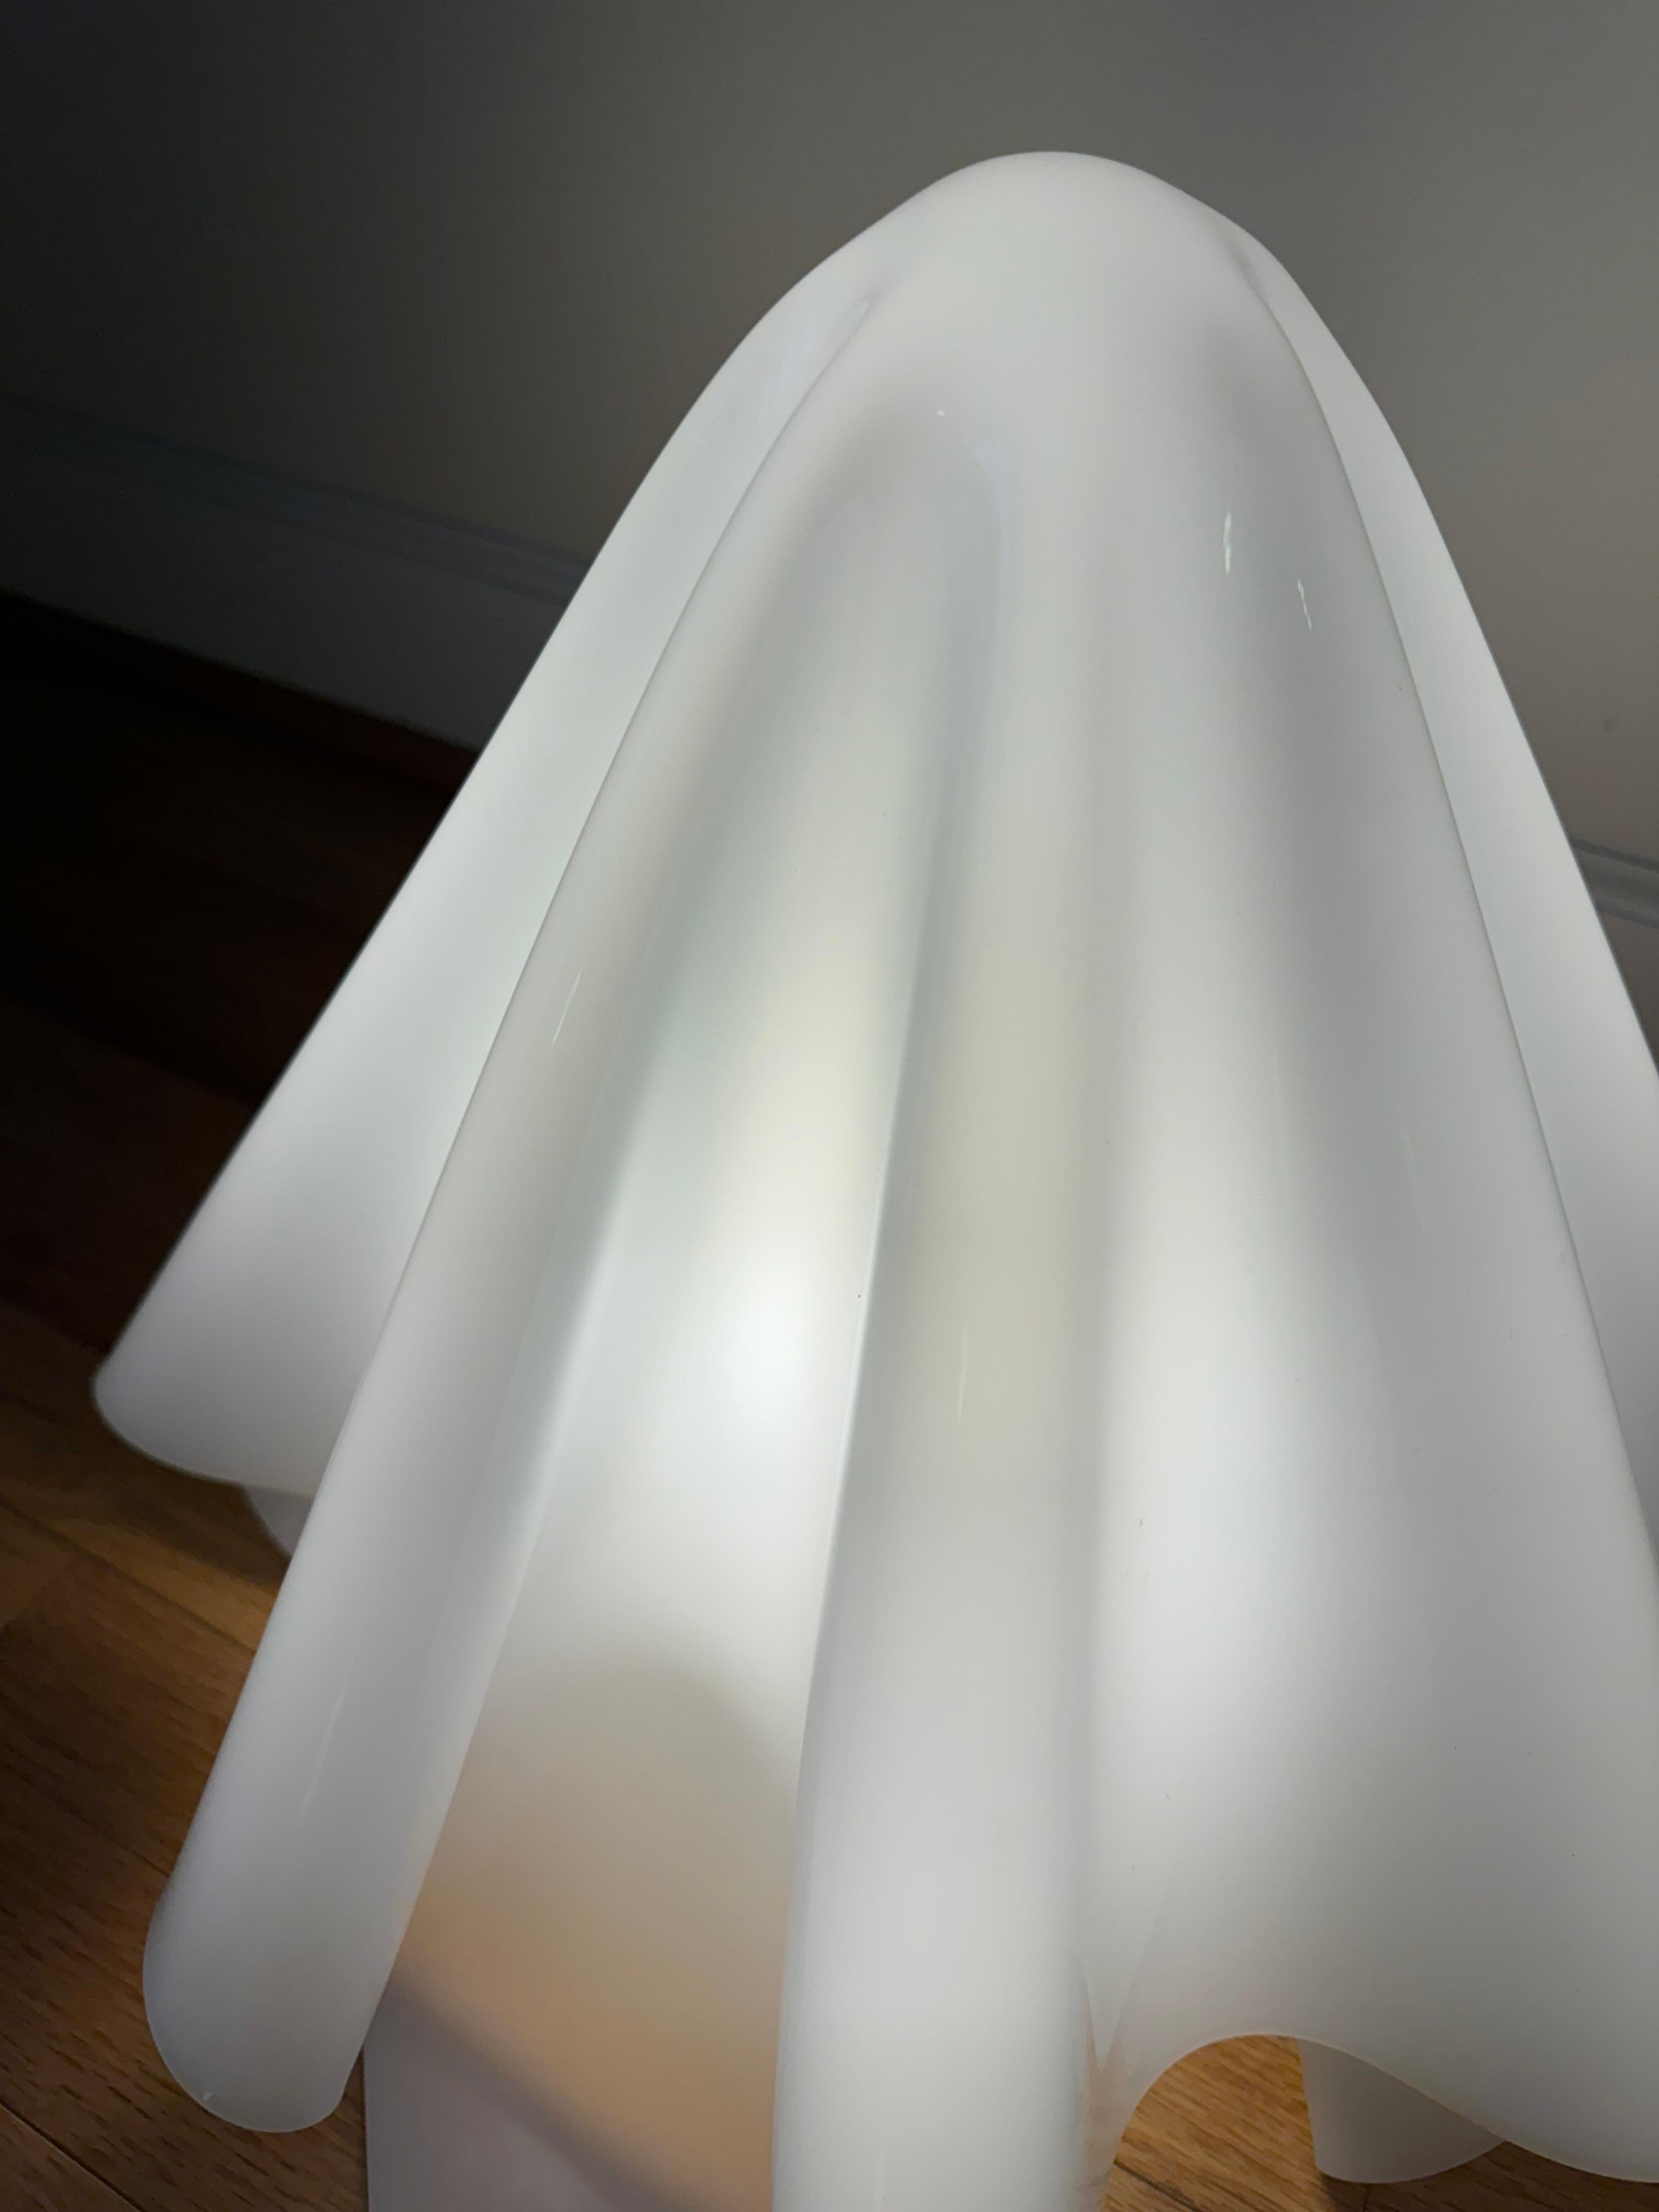 Rare early K-series (Oba- Q/Ghost) table lamp by Shiro Kuramata (Medium size) 1